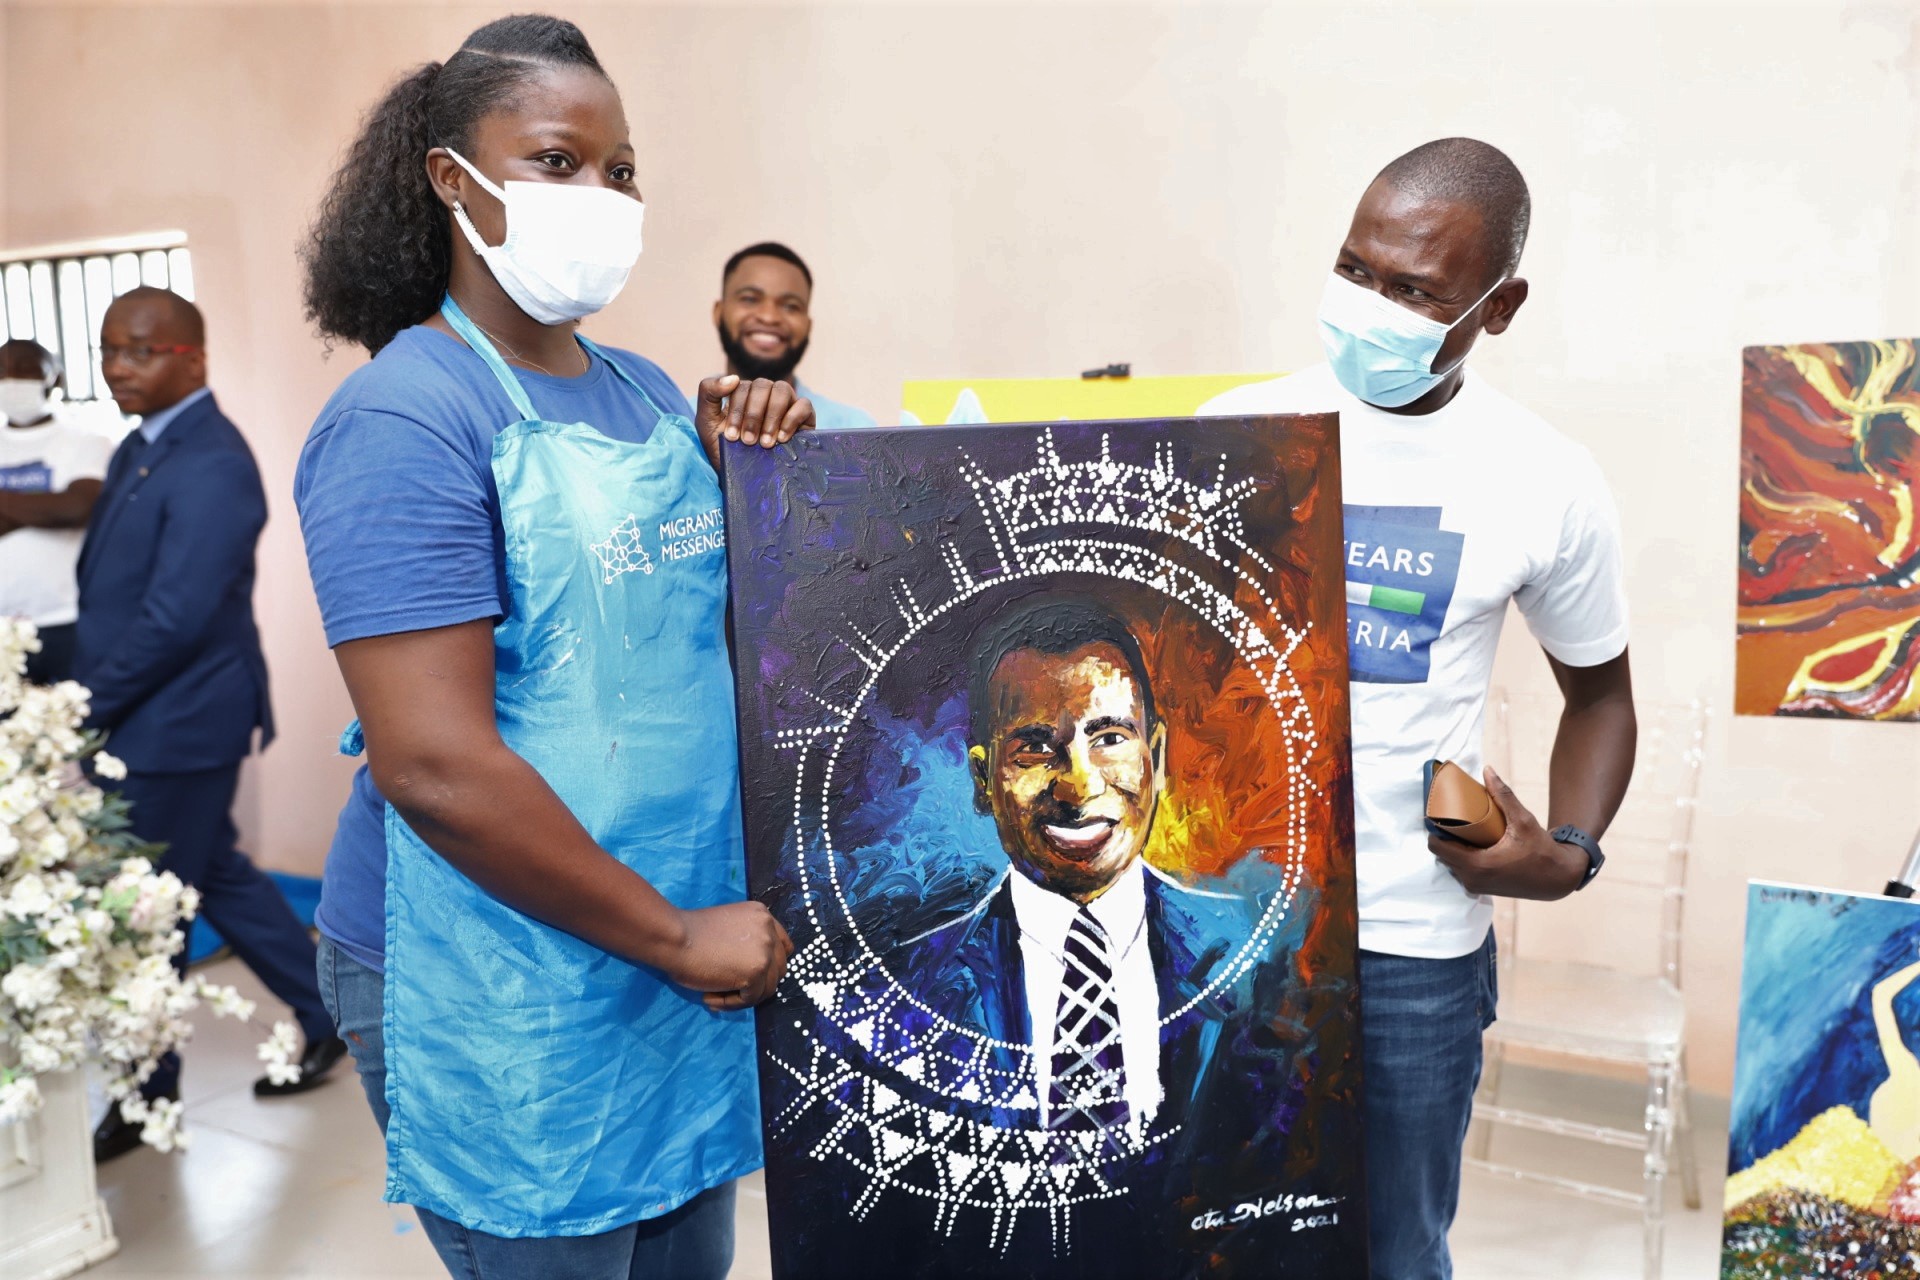 migrants as messengers speaking through art nigeria